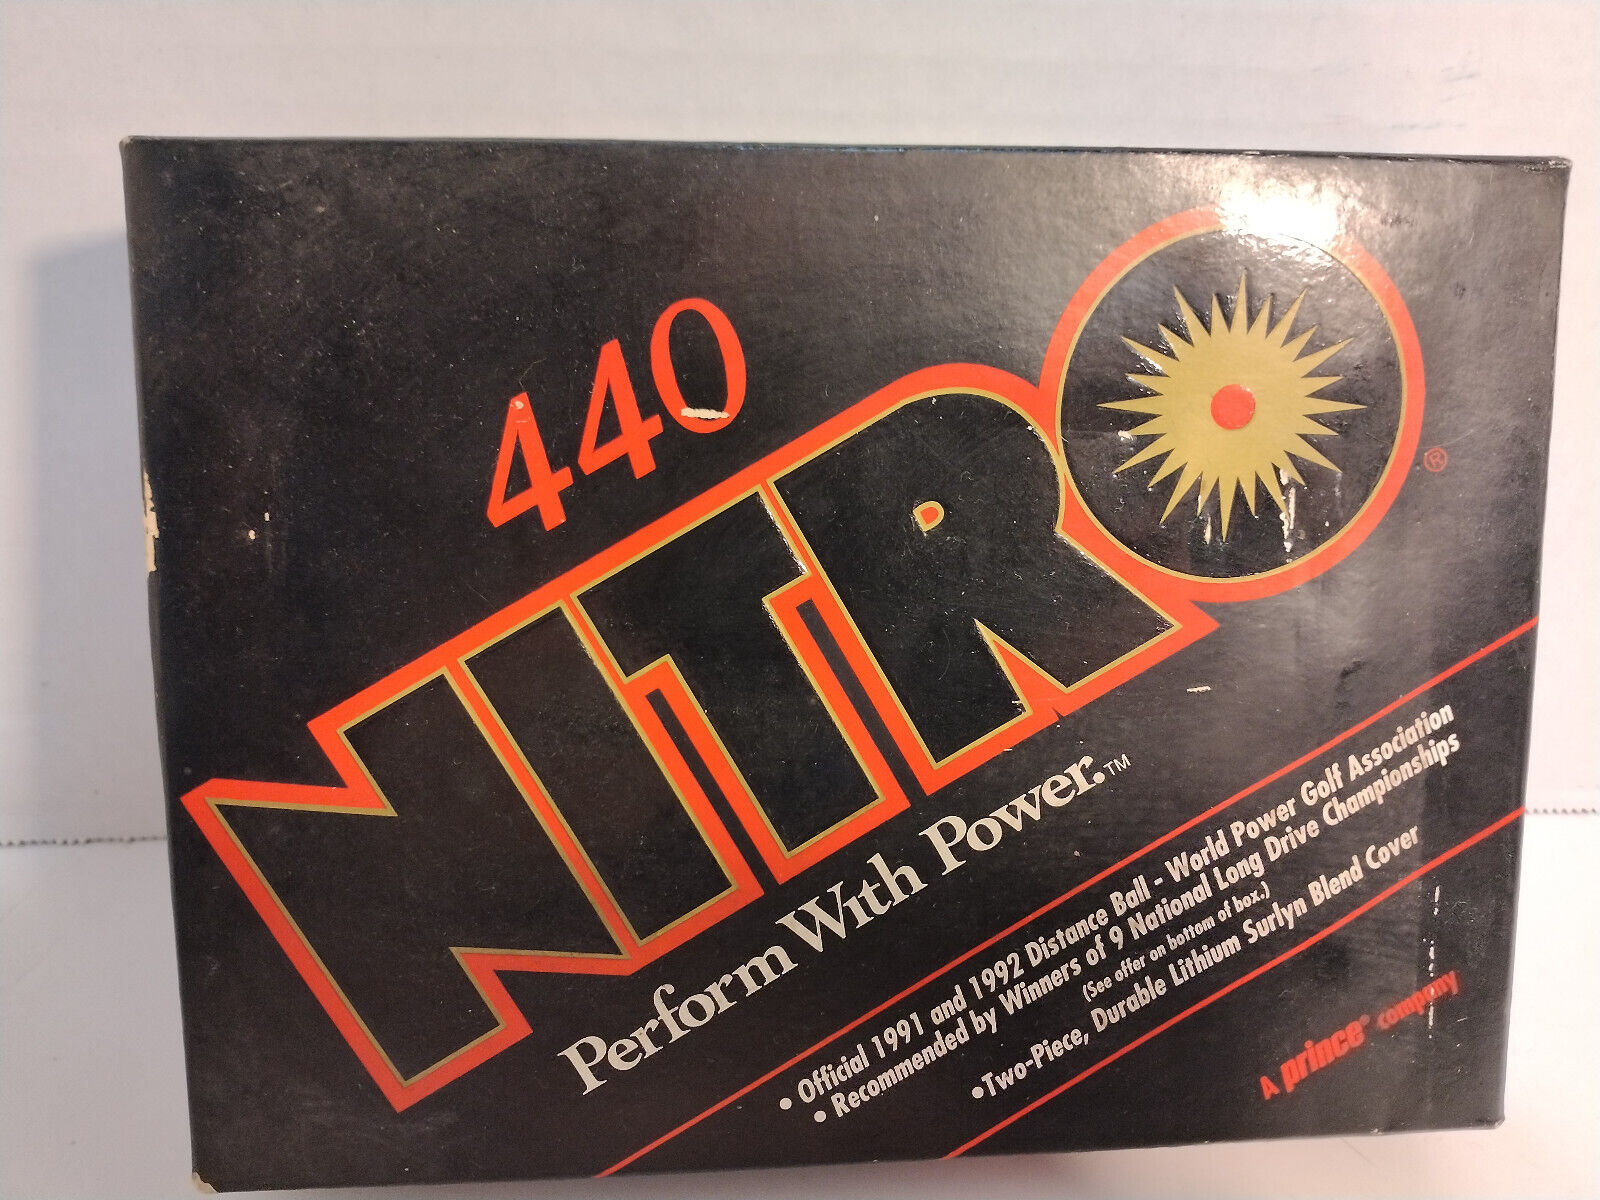 Nitro Golf Balls 440 1991 1992 Distance Ball 4 Packs of 3 - 12 Balls - $15.50